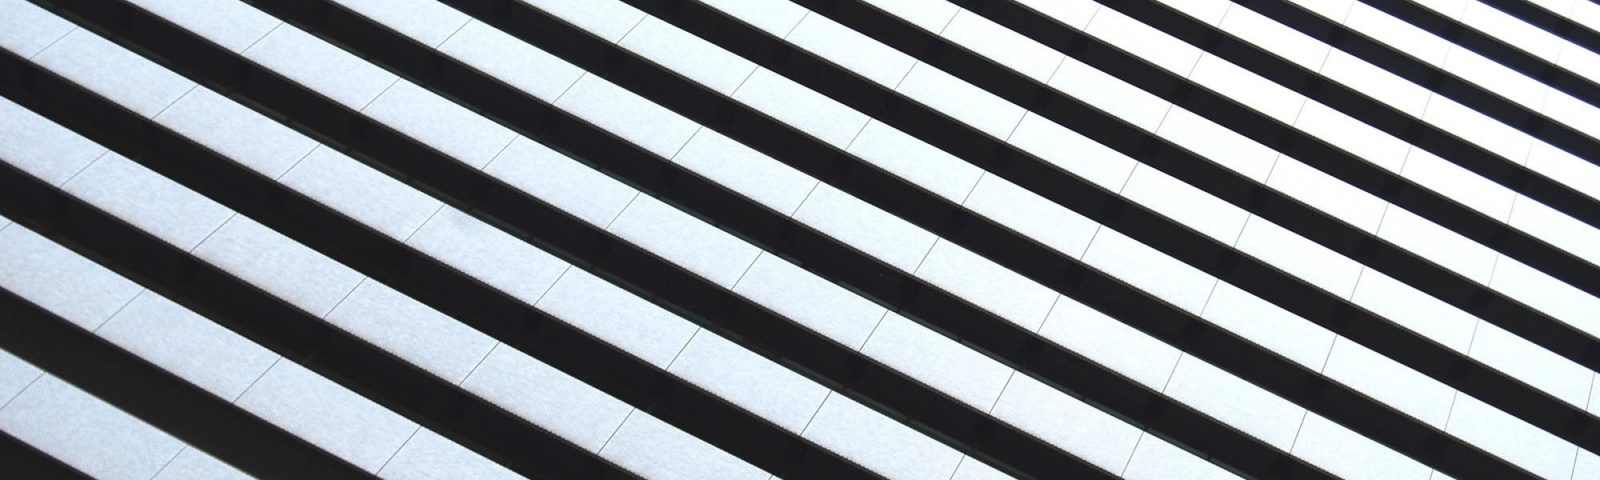 wing black and white white pattern line geometric 656201 pxhere.com